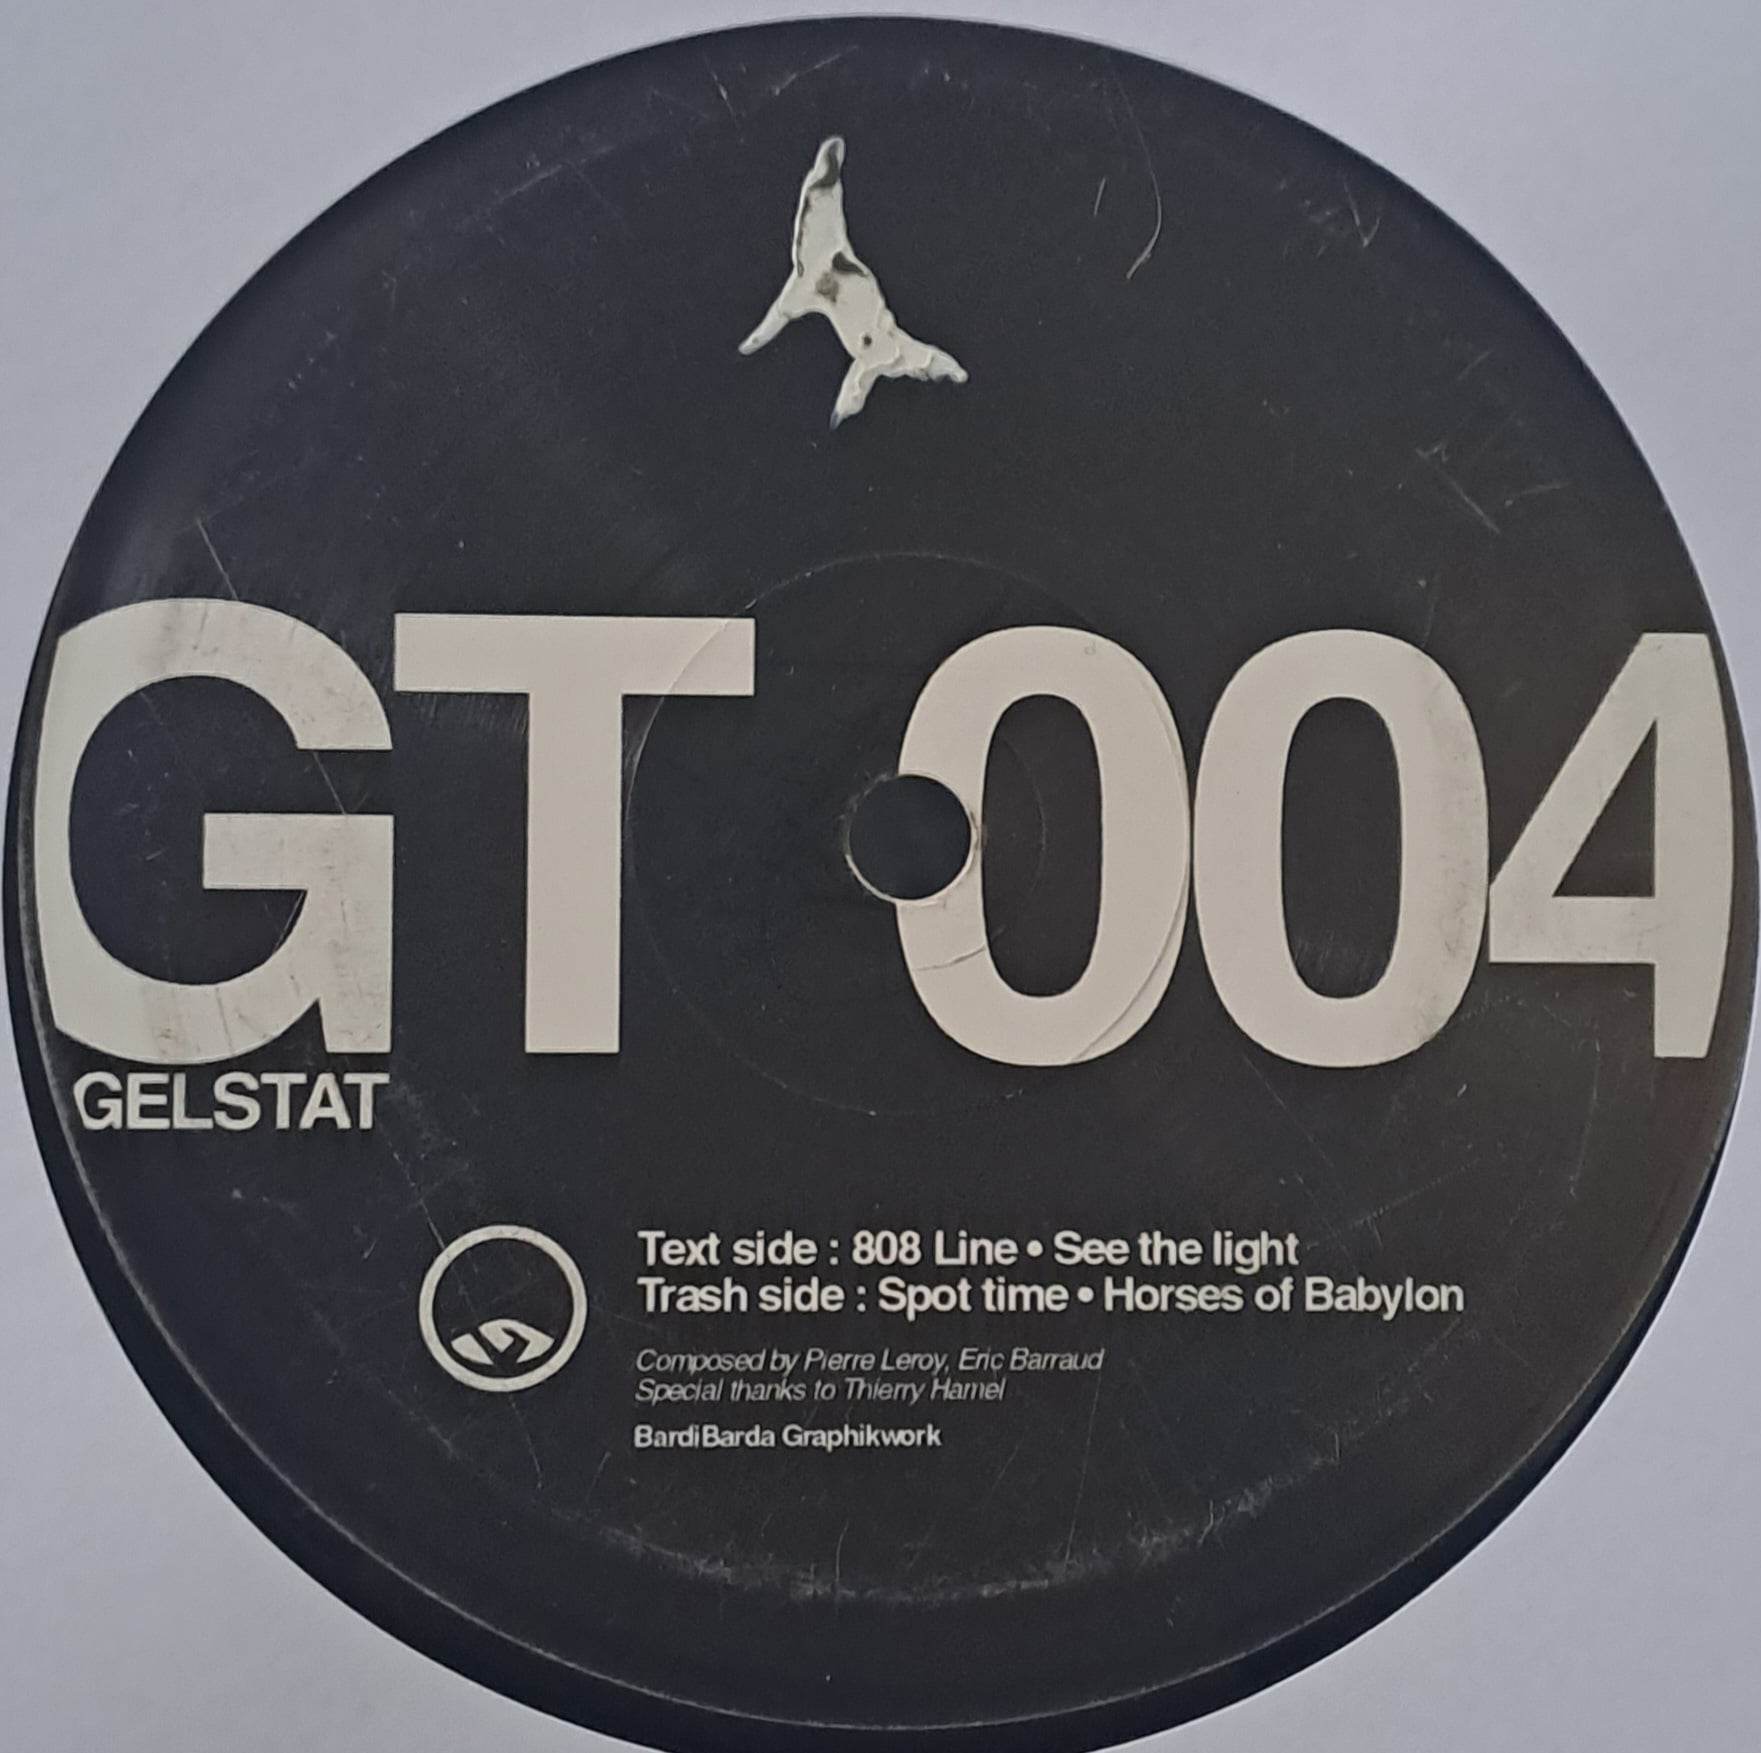 Gelstat 04 - vinyle techno